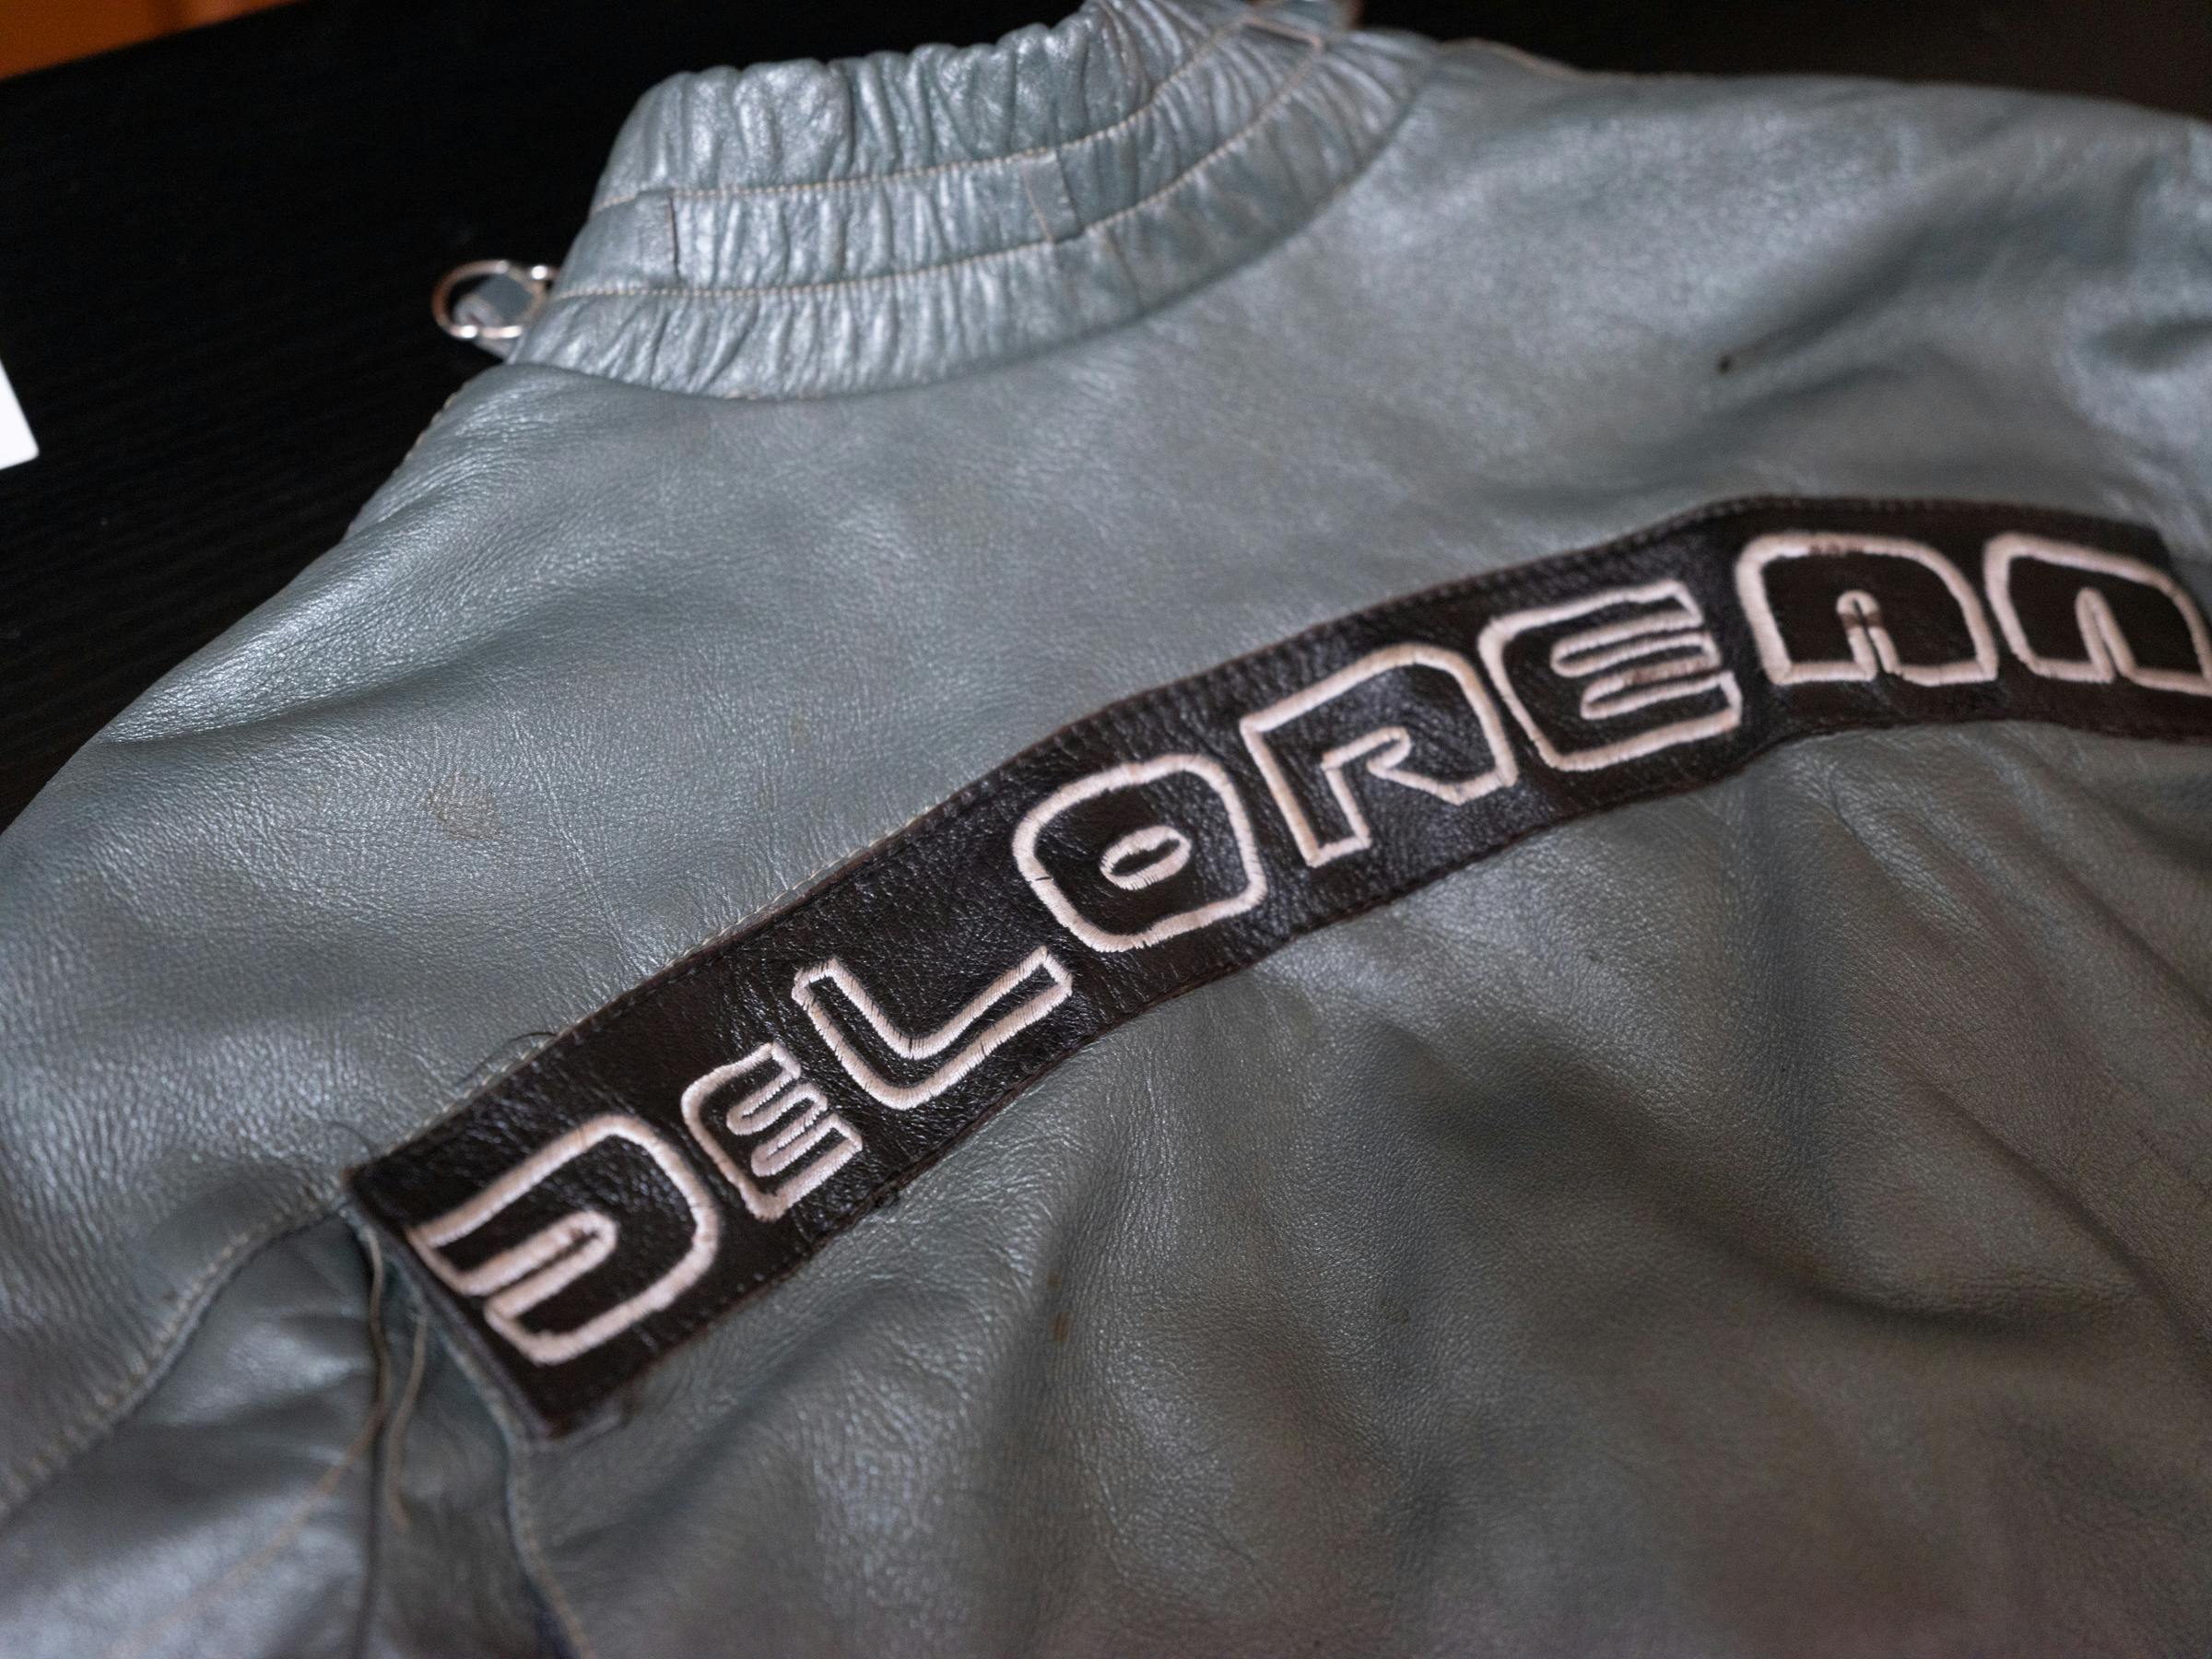 Kat DeLorean's vintage Delorean garment